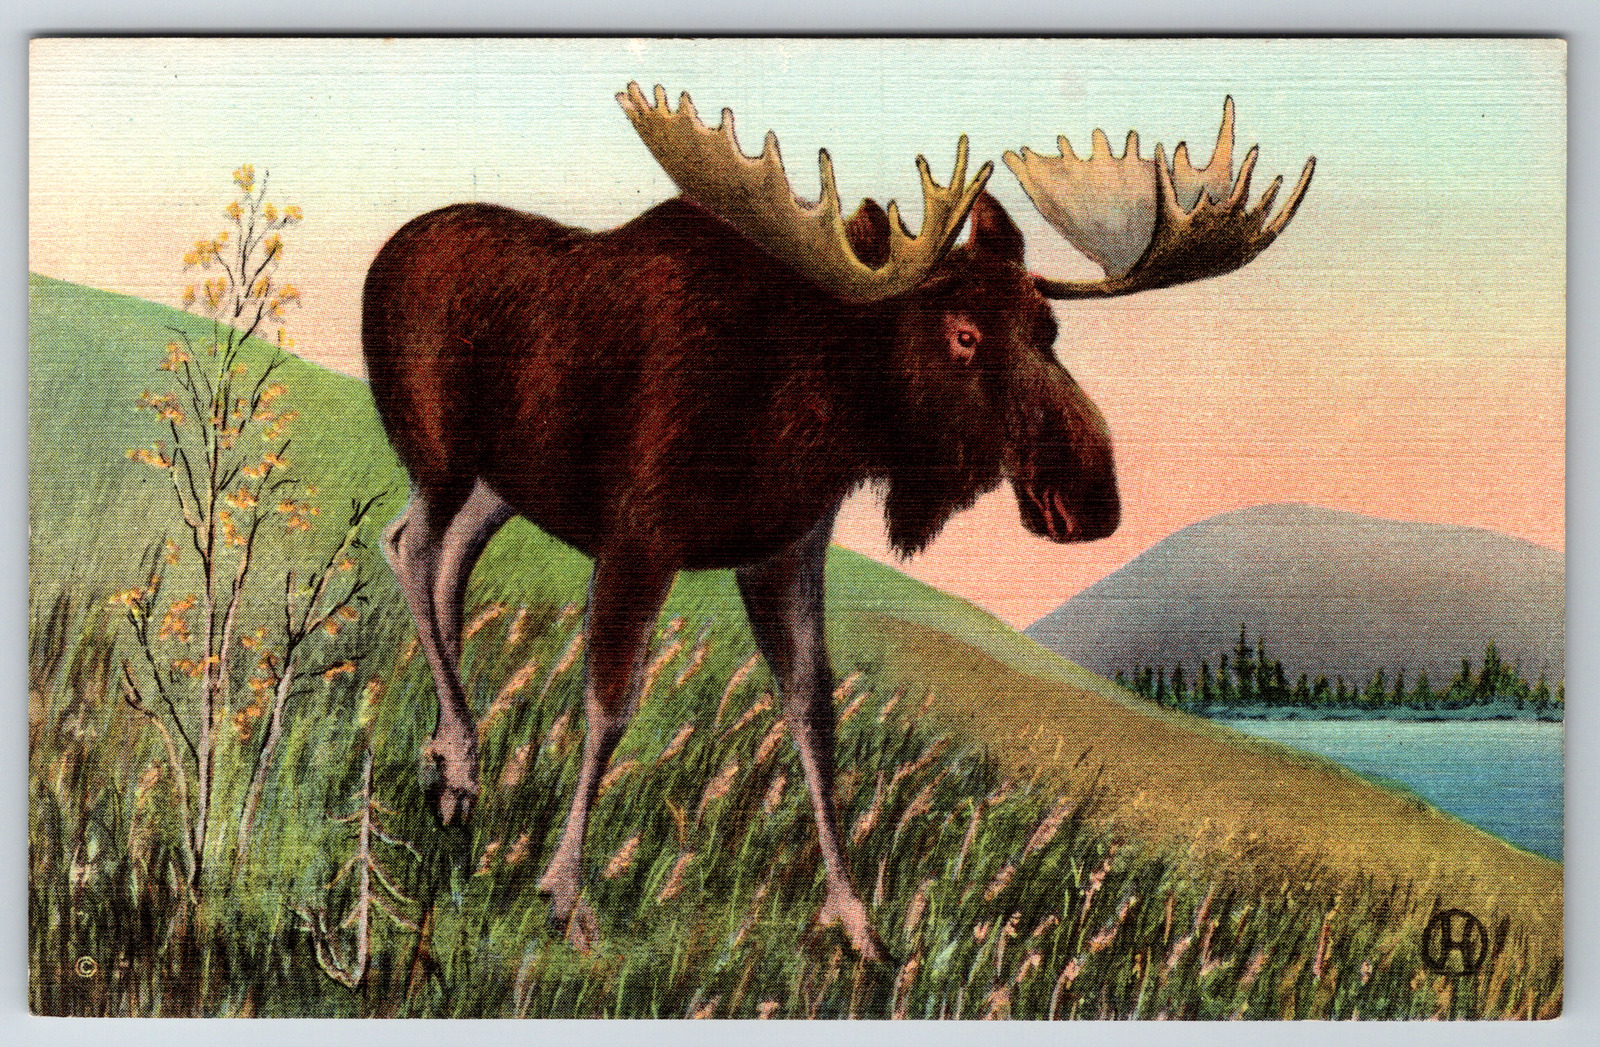 c1940s Alaskan Moose Alaska Wild Life Vintage Linen Postcard